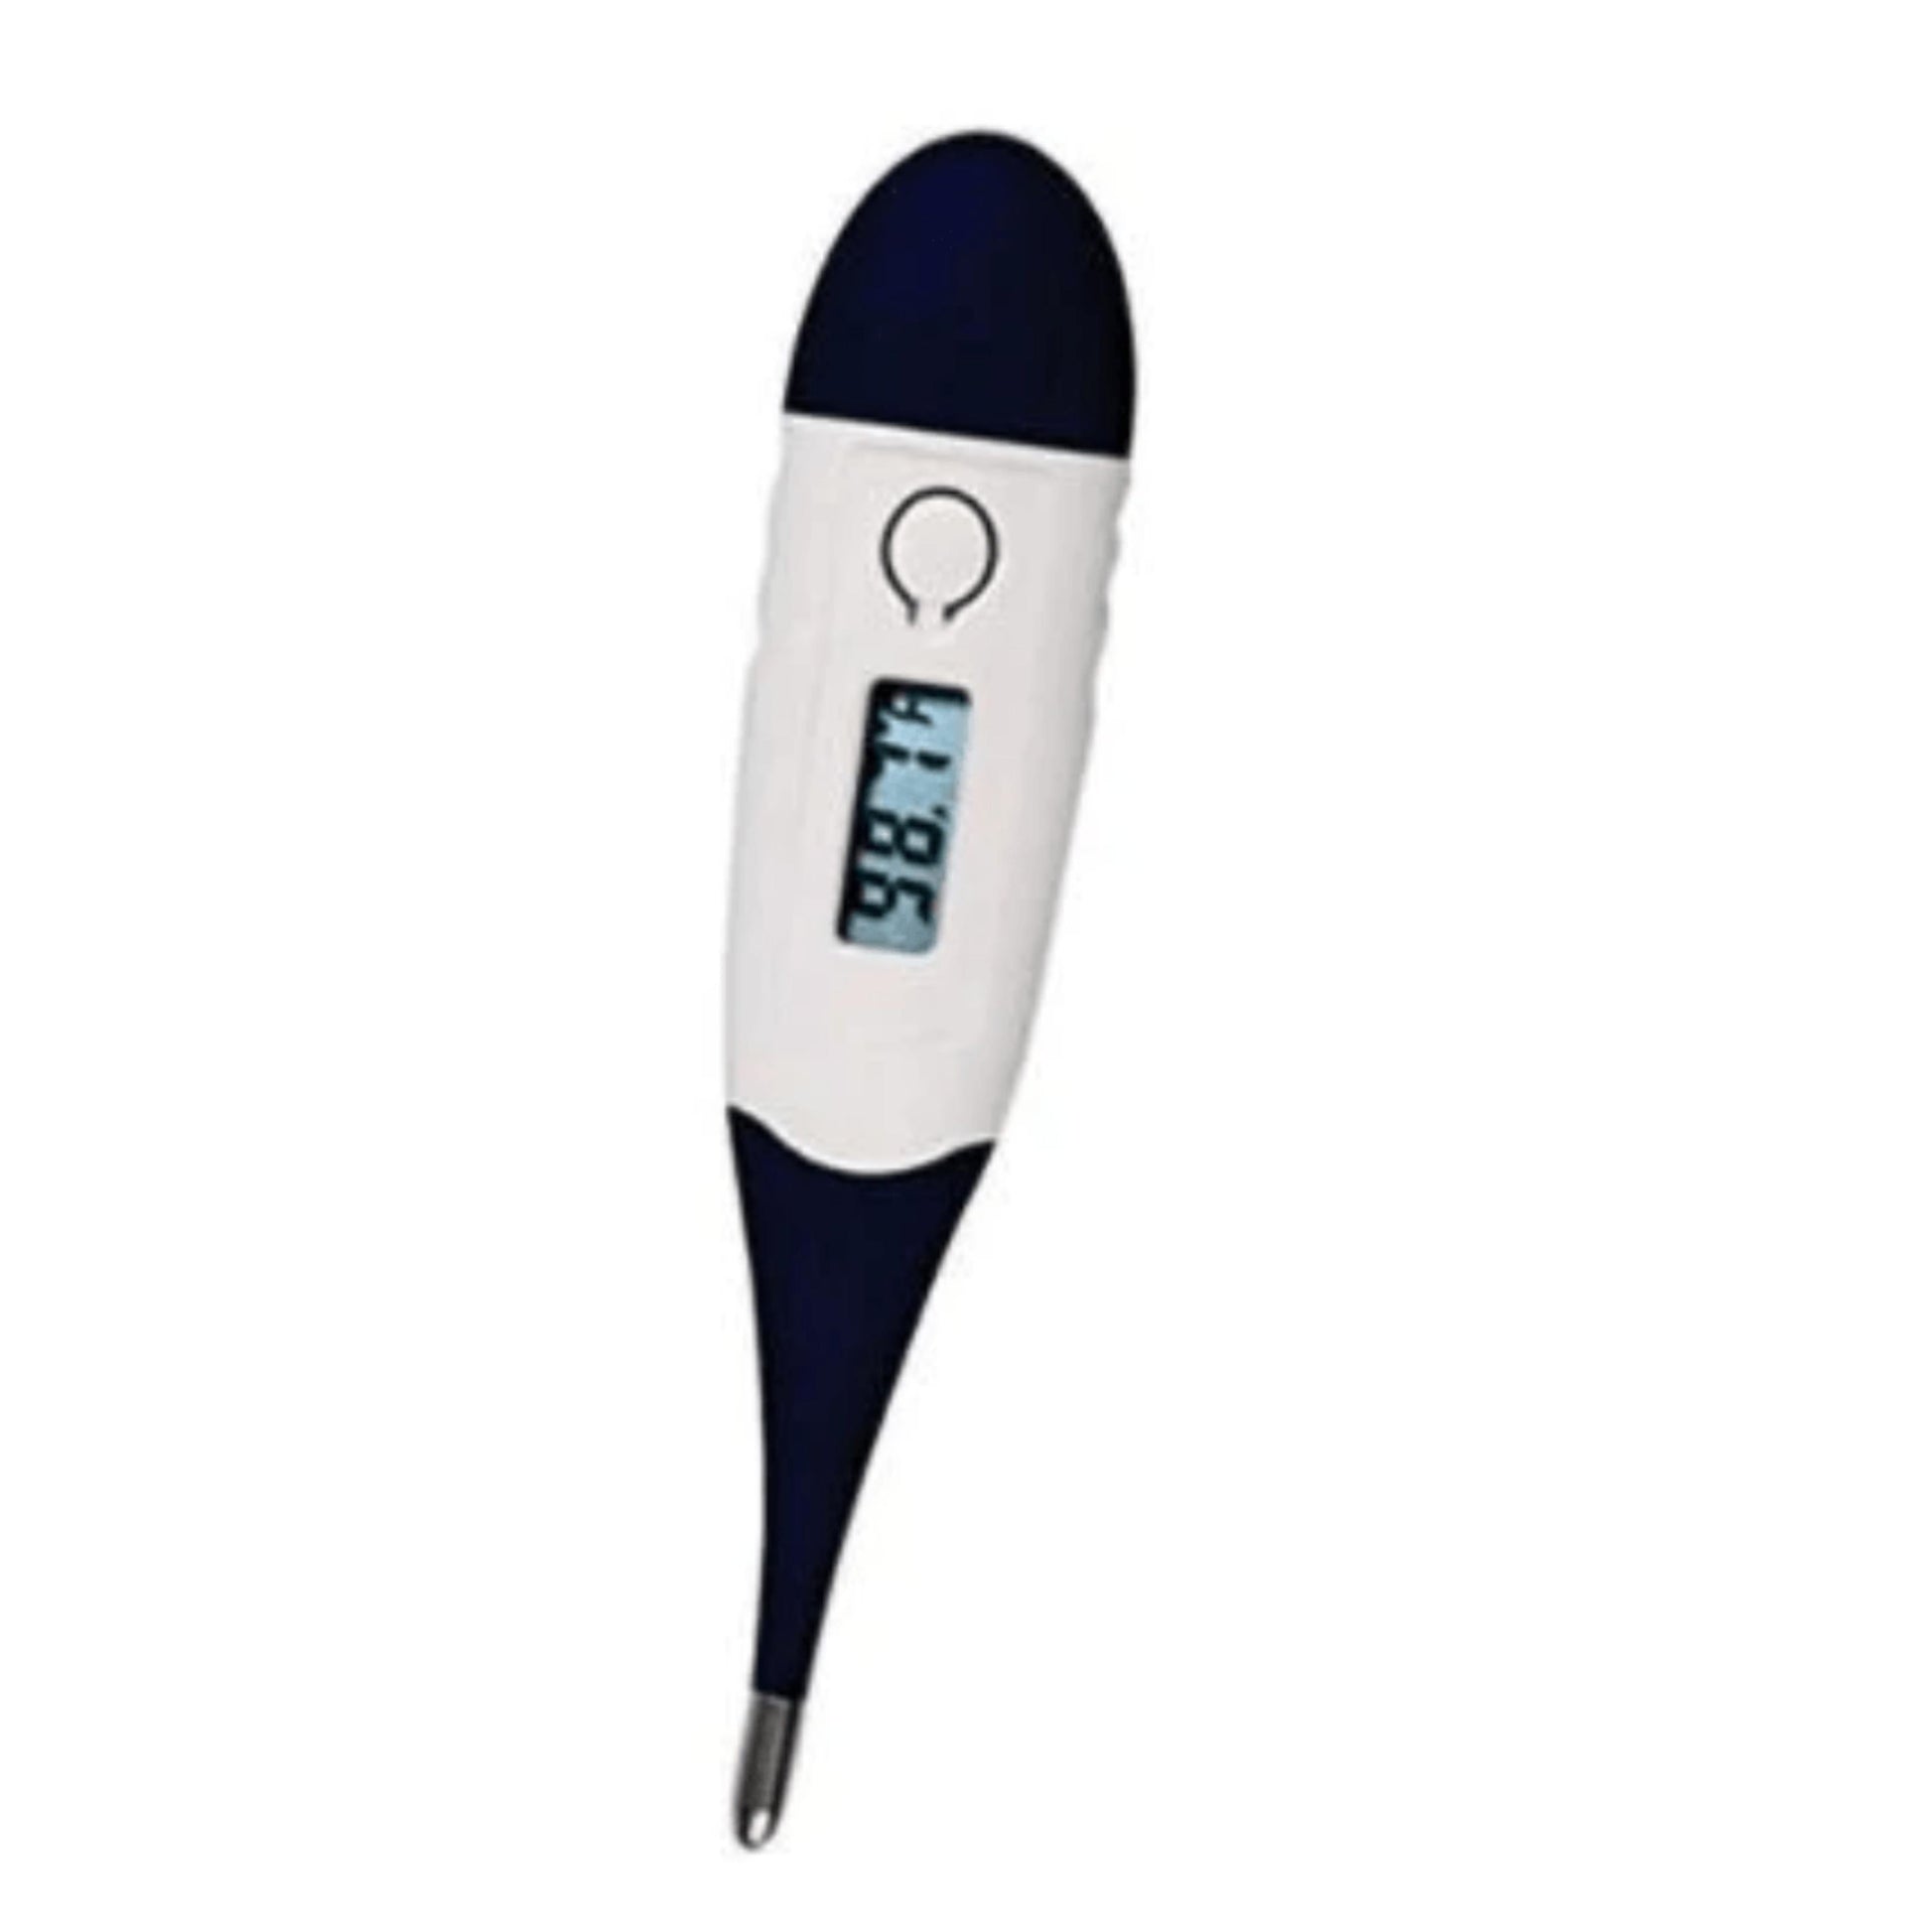 ENJI Baby Essentials ENJI - 10 Second Body Fever Thermometer